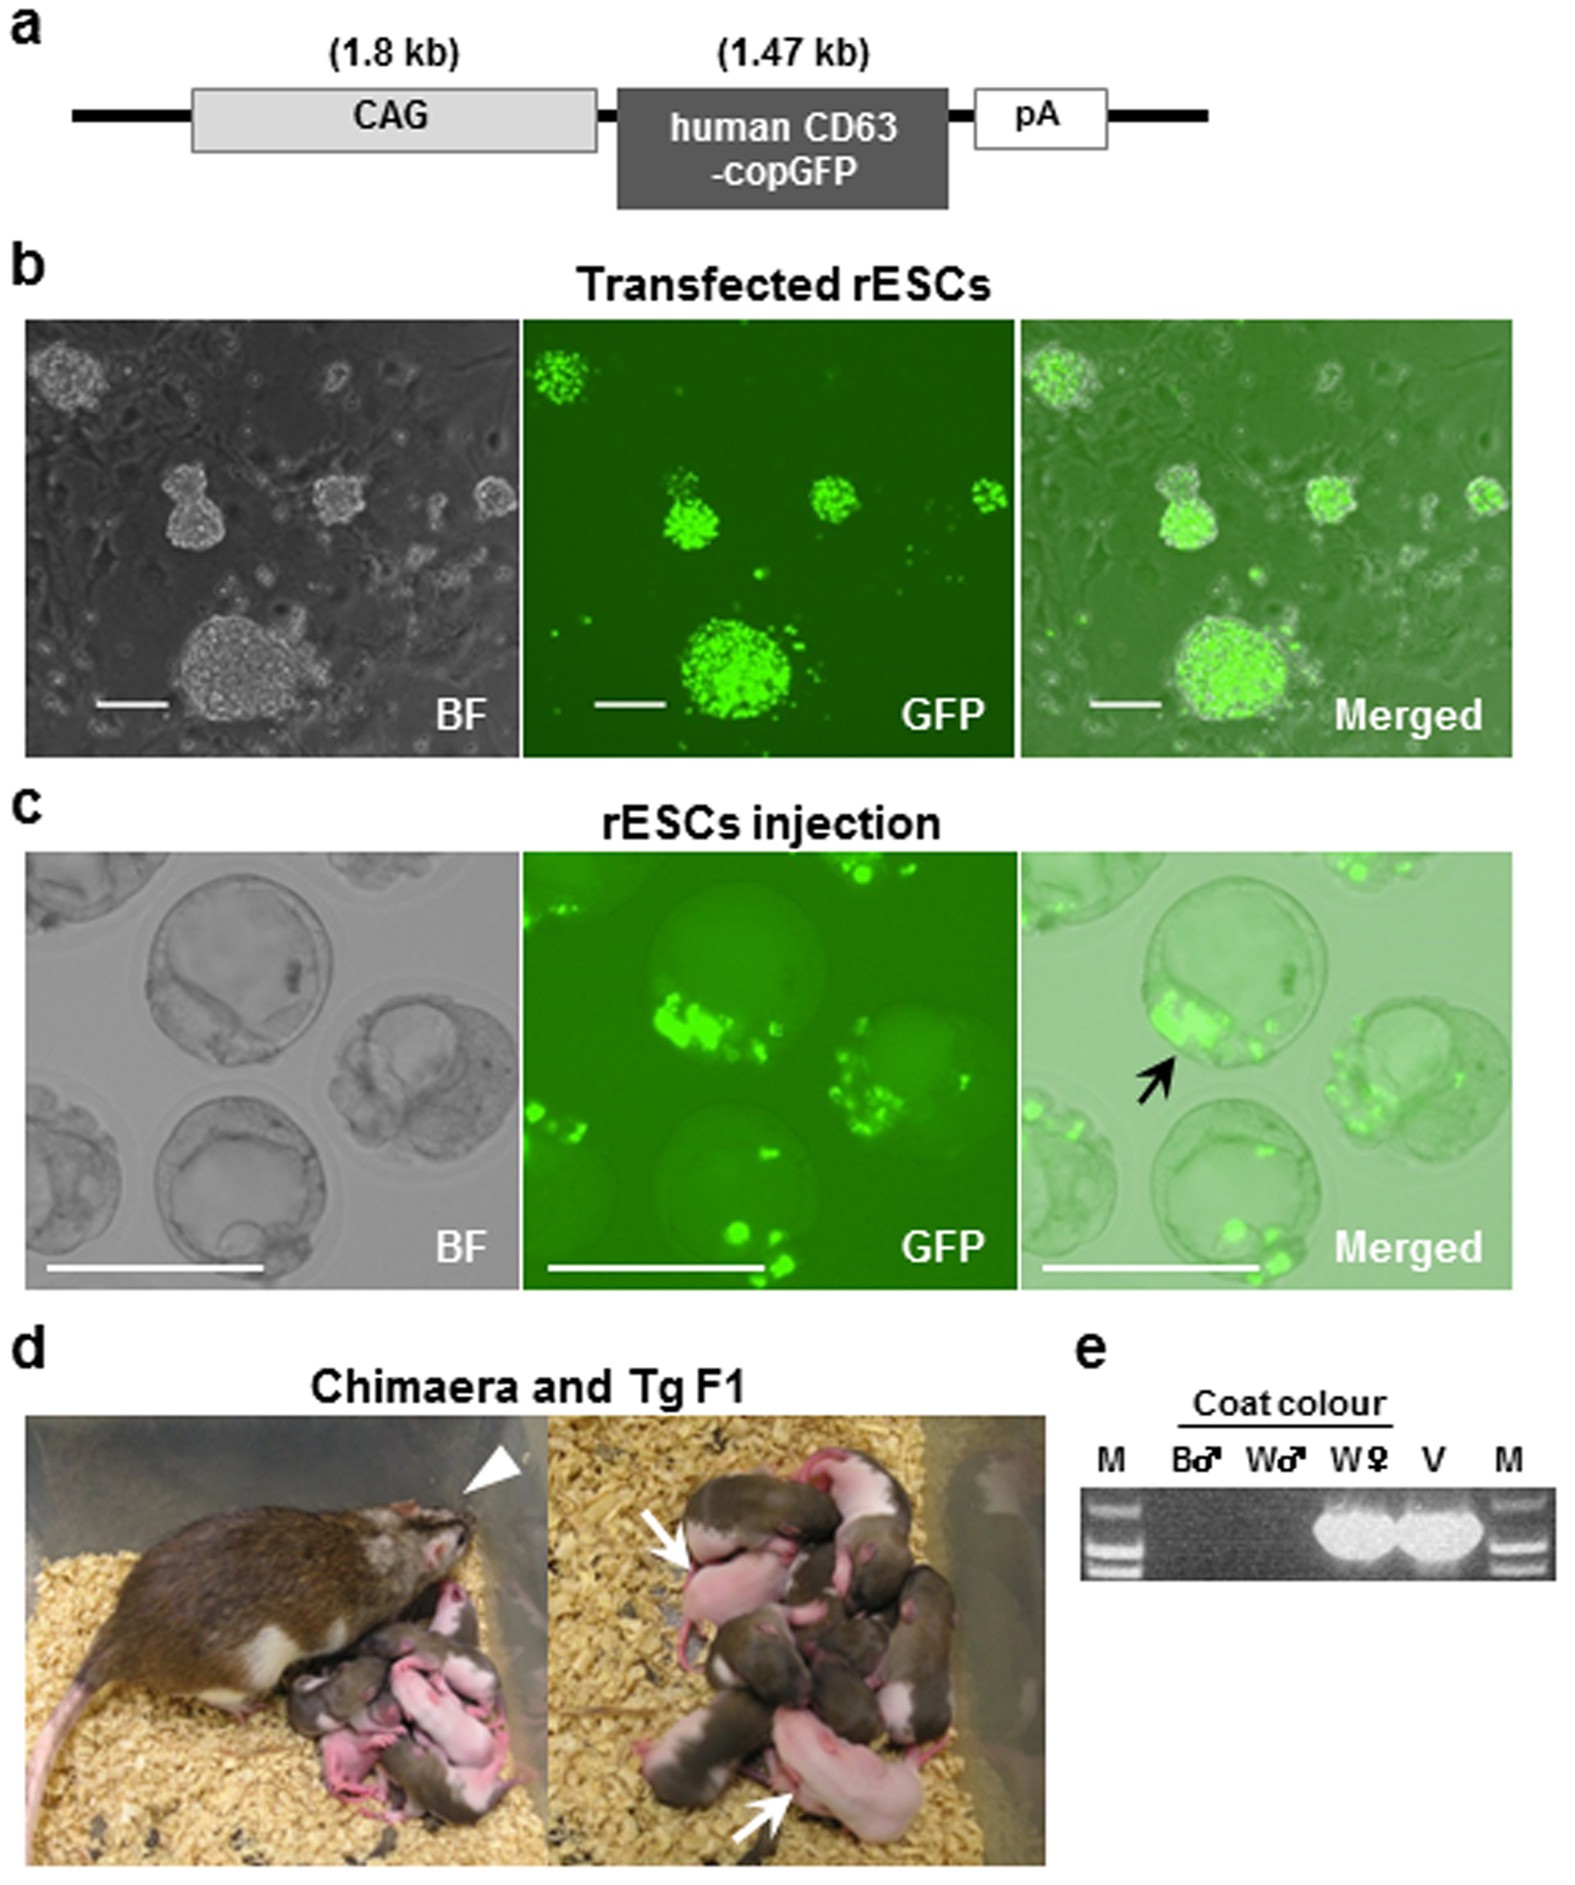 Sælger voldtage krølle Generation of a novel transgenic rat model for tracing extracellular  vesicles in body fluids | Scientific Reports